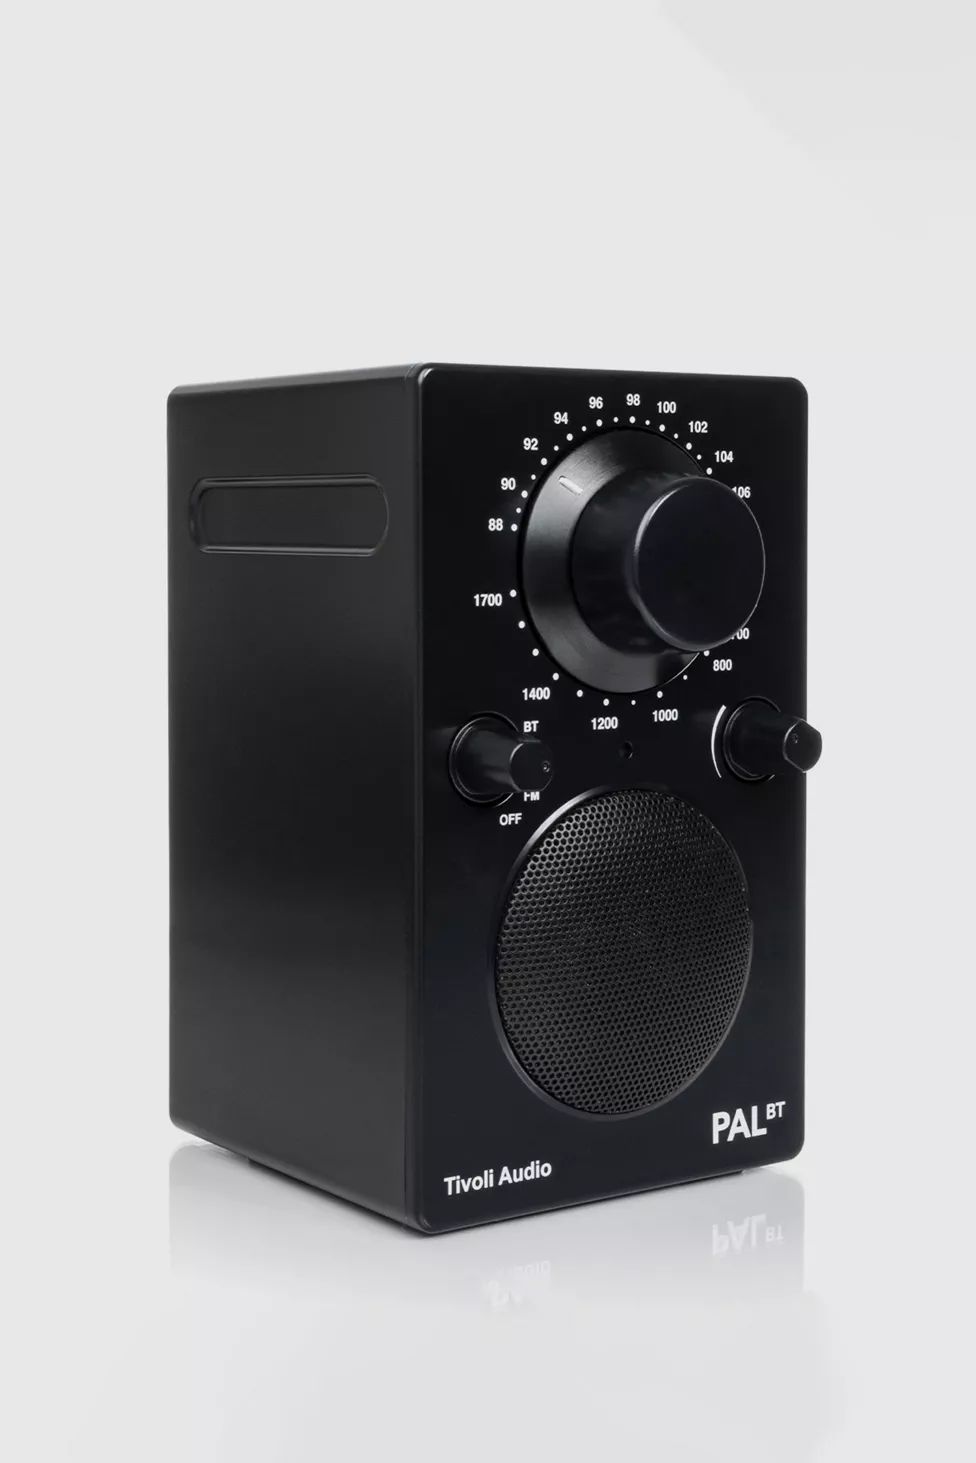 Tivoli Audio PAL BT Bluetooth AM/FM Portable Radio & Speaker | Urban Outfitters (US and RoW)